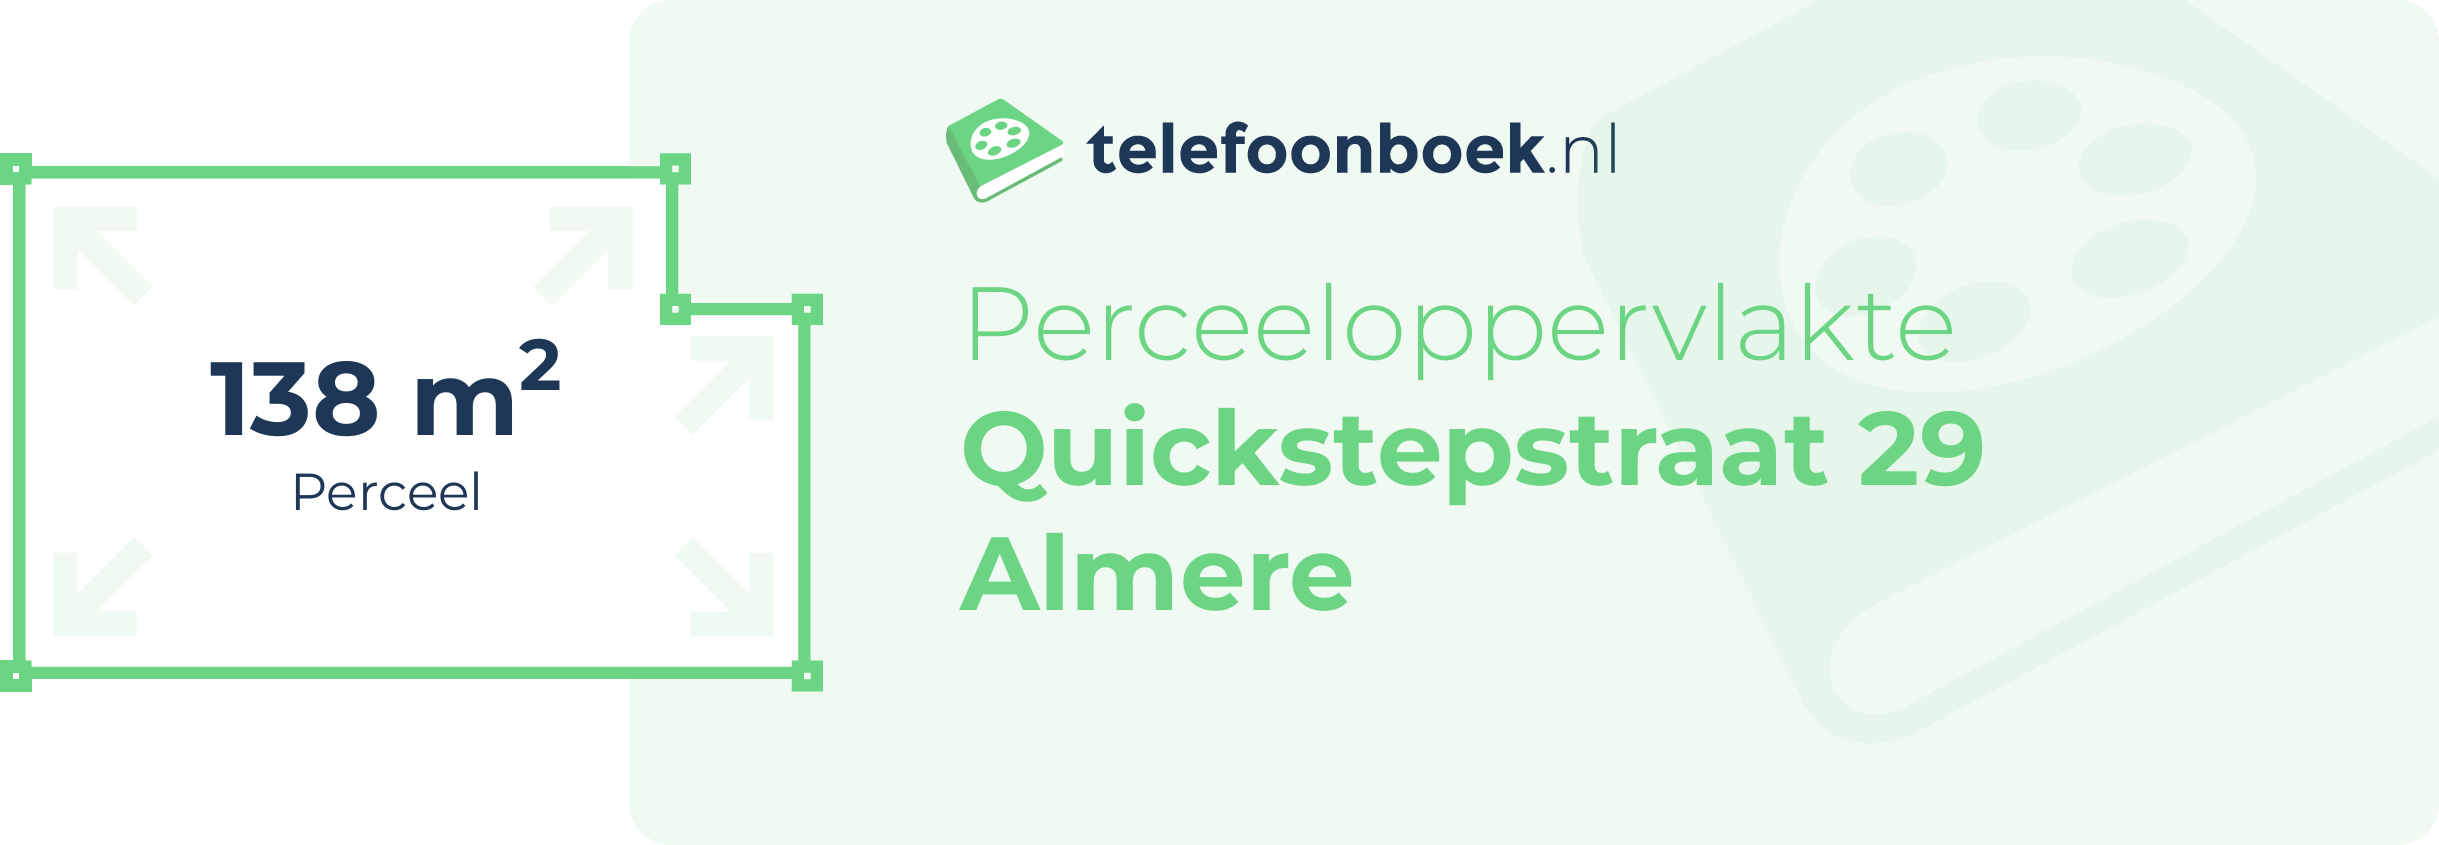 Perceeloppervlakte Quickstepstraat 29 Almere